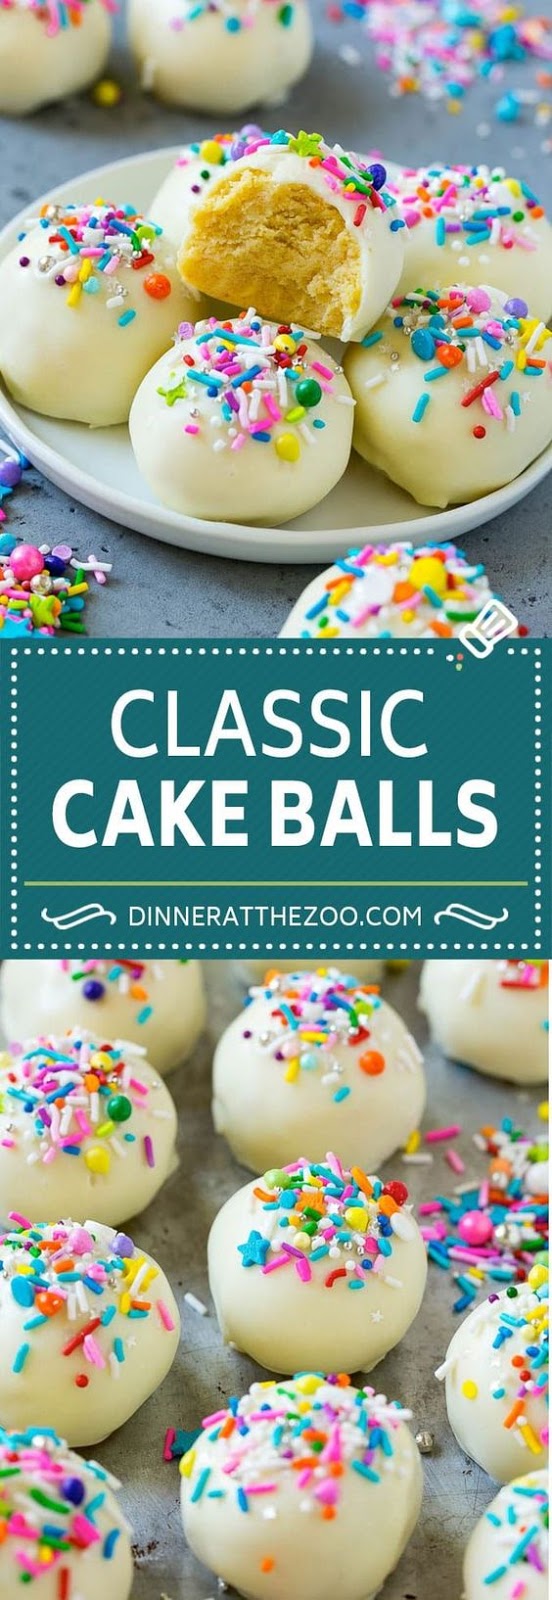 Cake Balls Recipe | Cake Truffles | Cake Bites #cake #dessert #sweets #dinneratthezoo